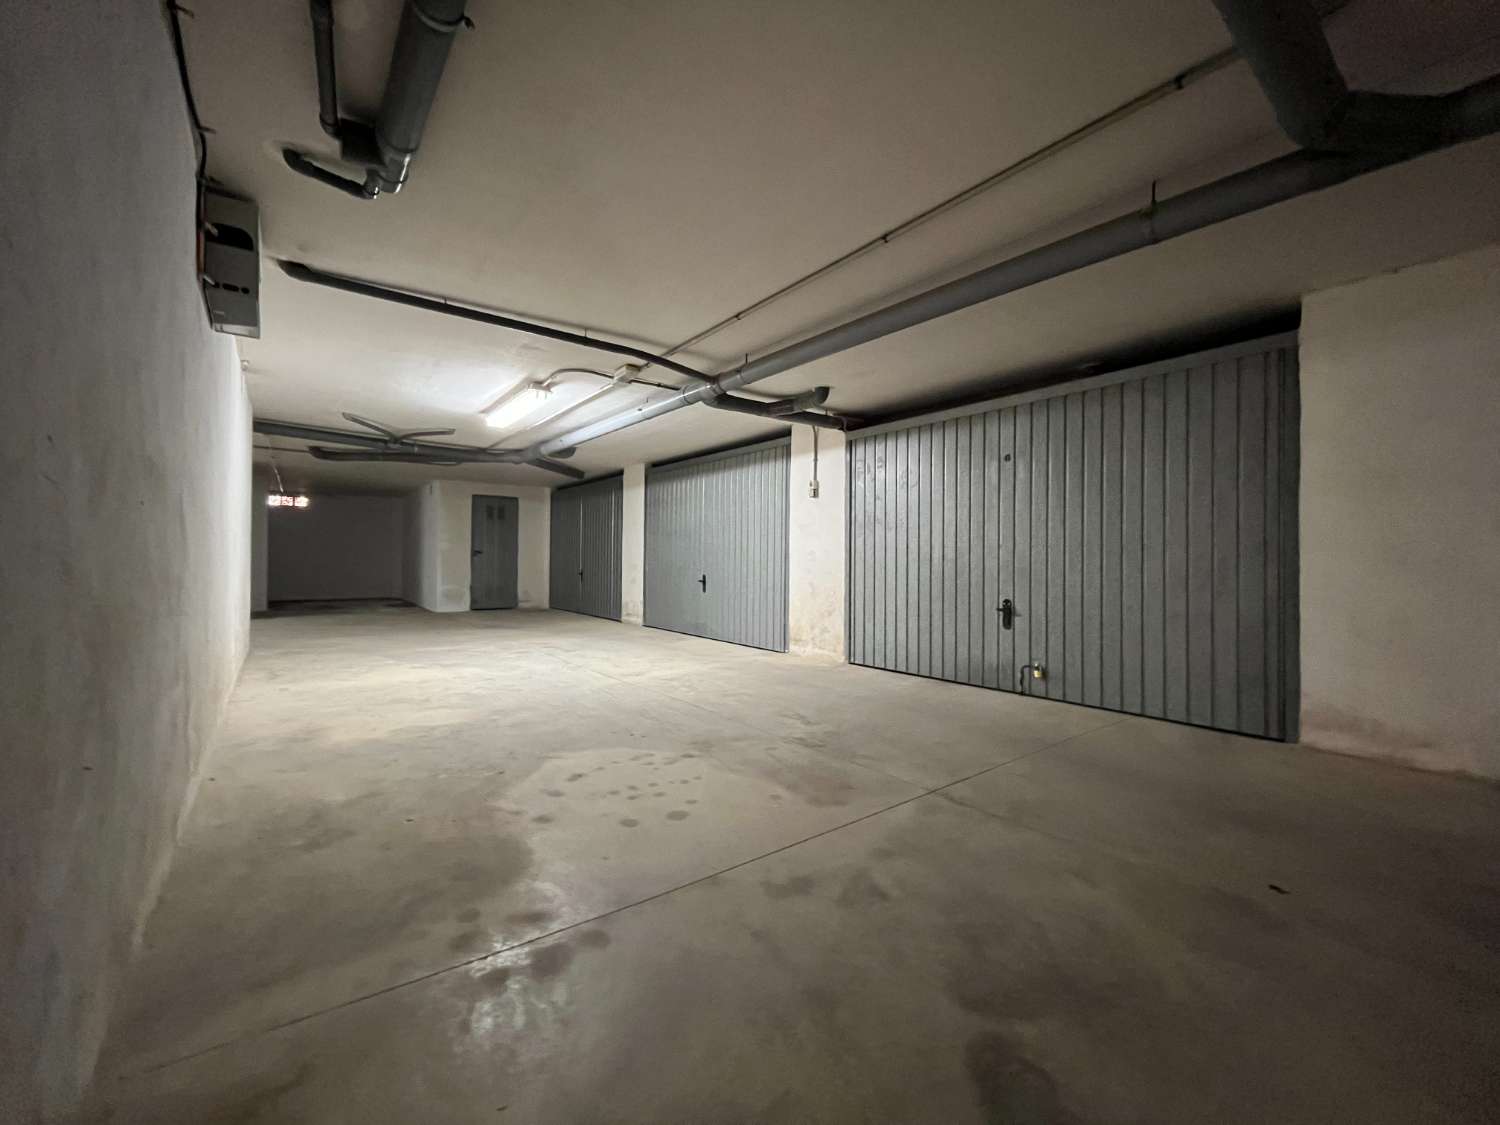 Grand garage souterrain fermé